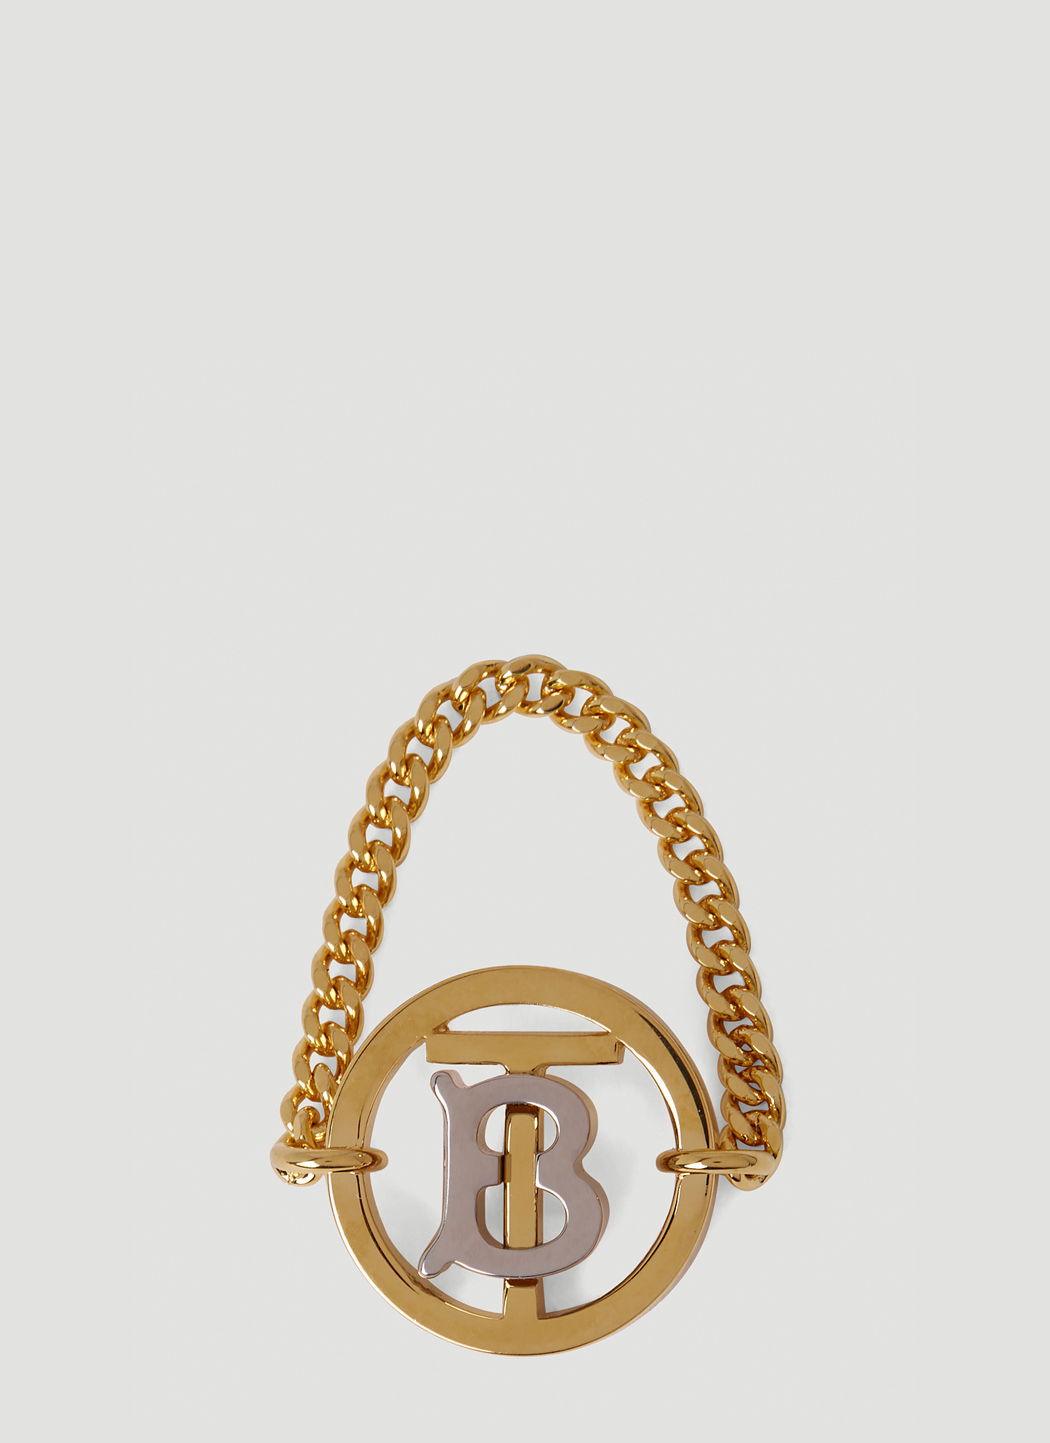 TB Chain Ring